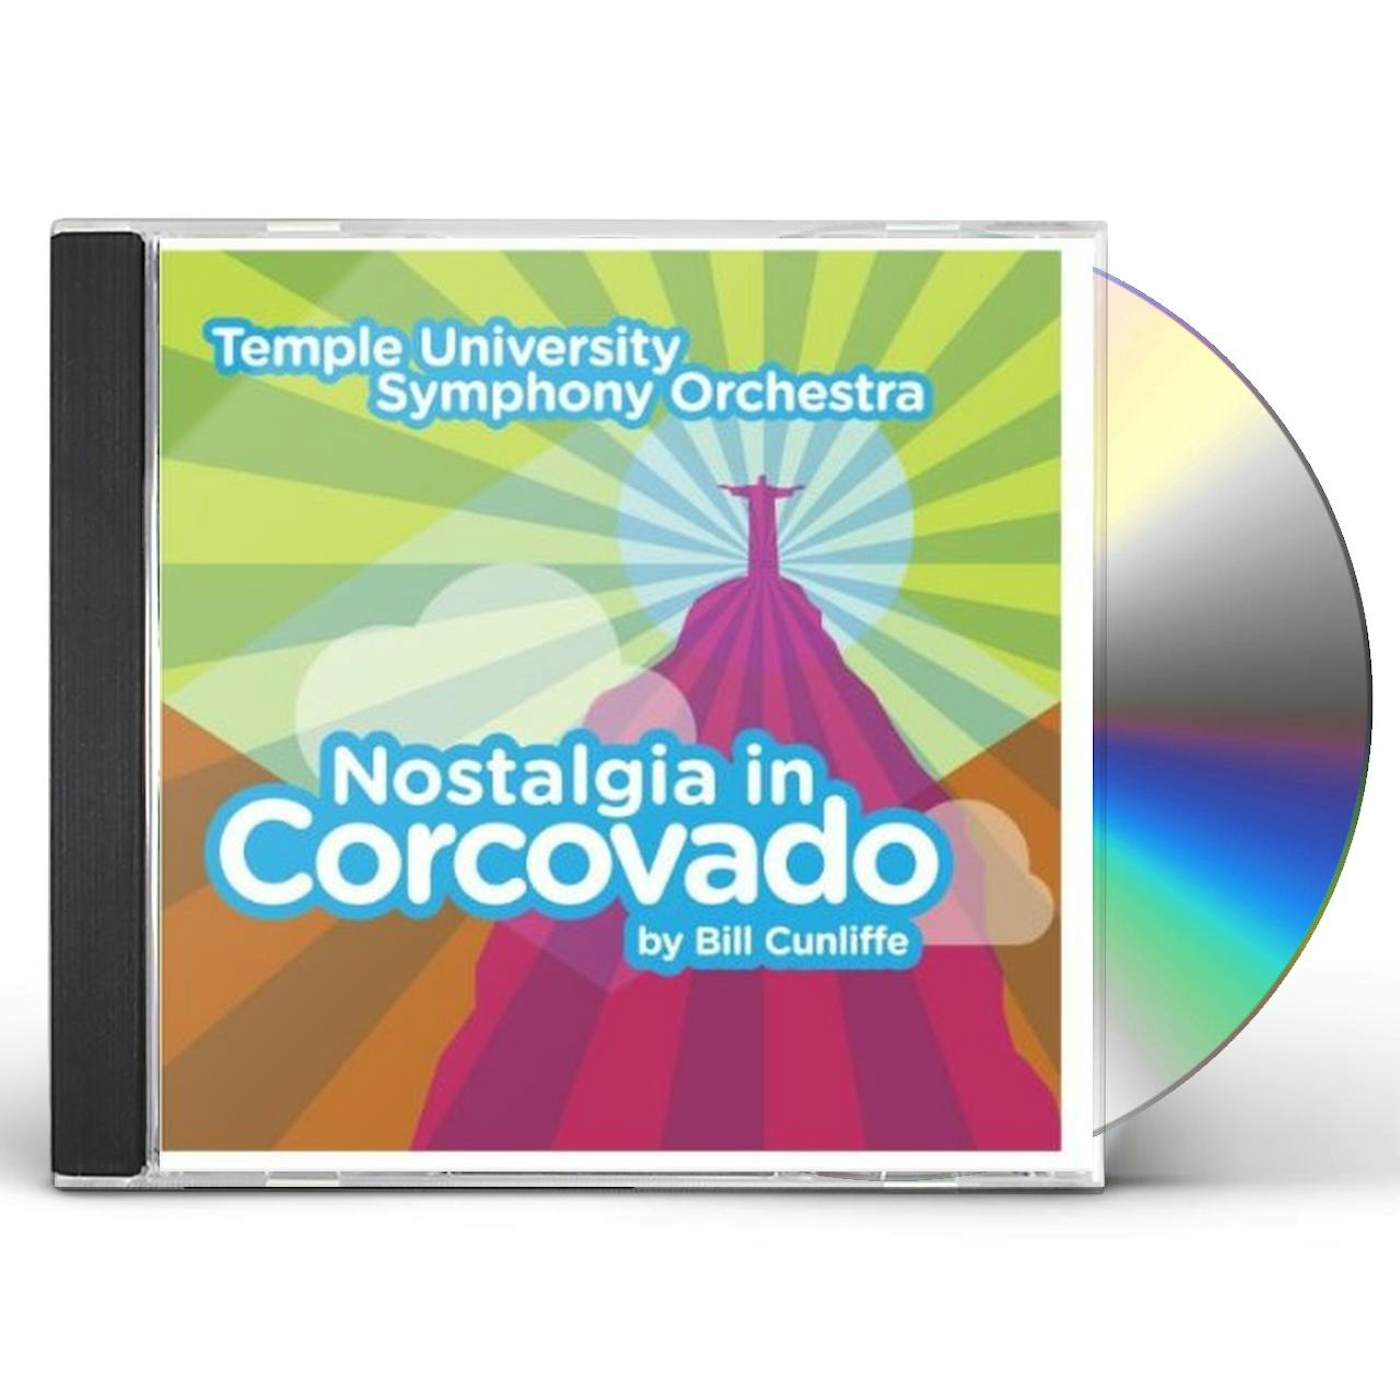 Temple University Symphony Orchestra NOSTALGIA IN CORCOVADO CD